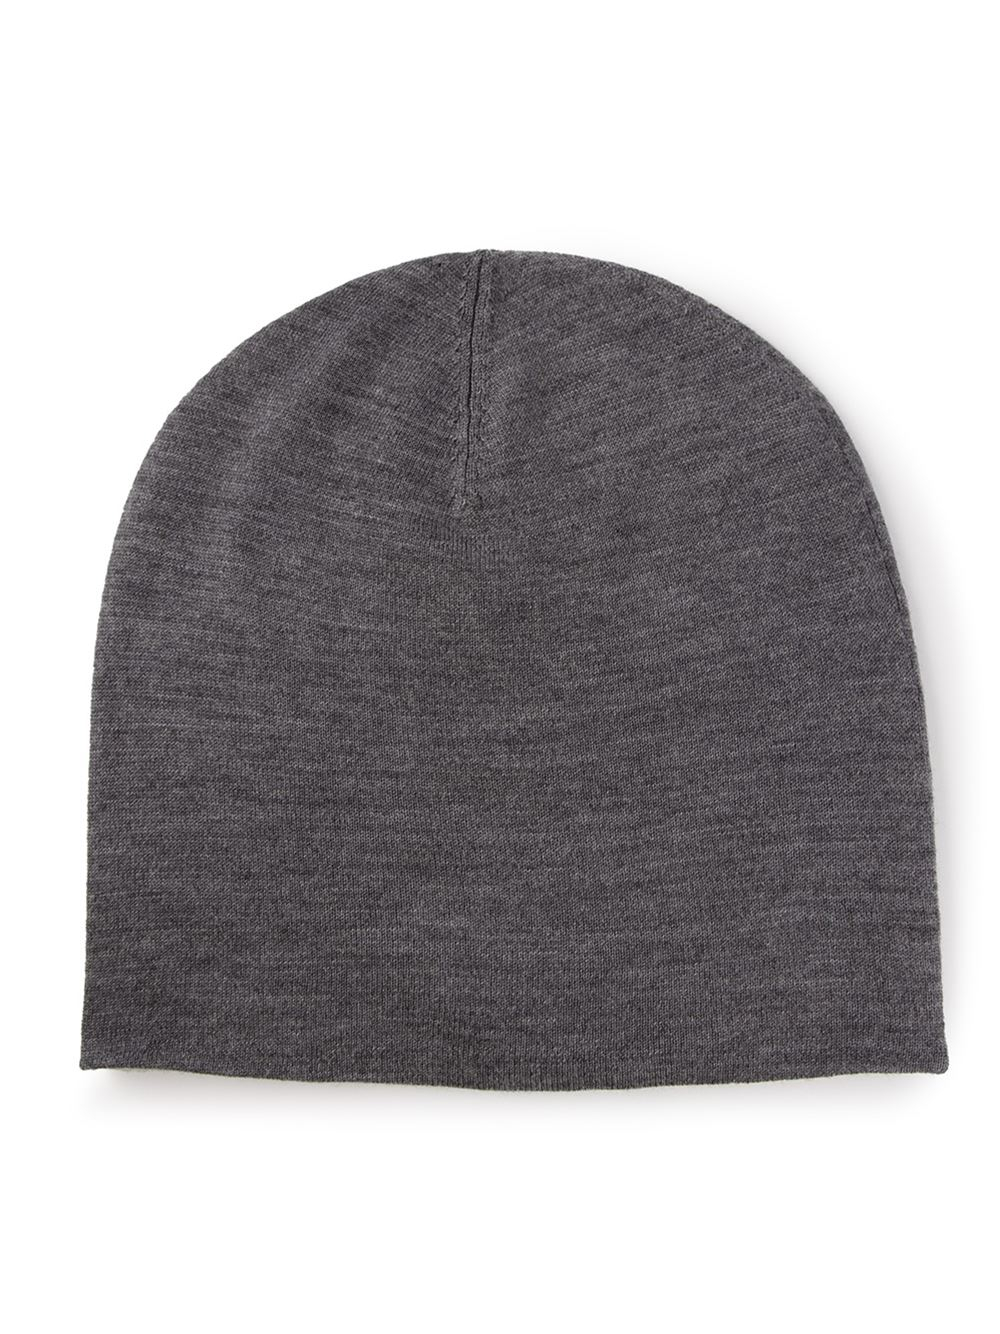 Acne Studios Classic Beanie Hat in Grey (Gray) for Men - Lyst